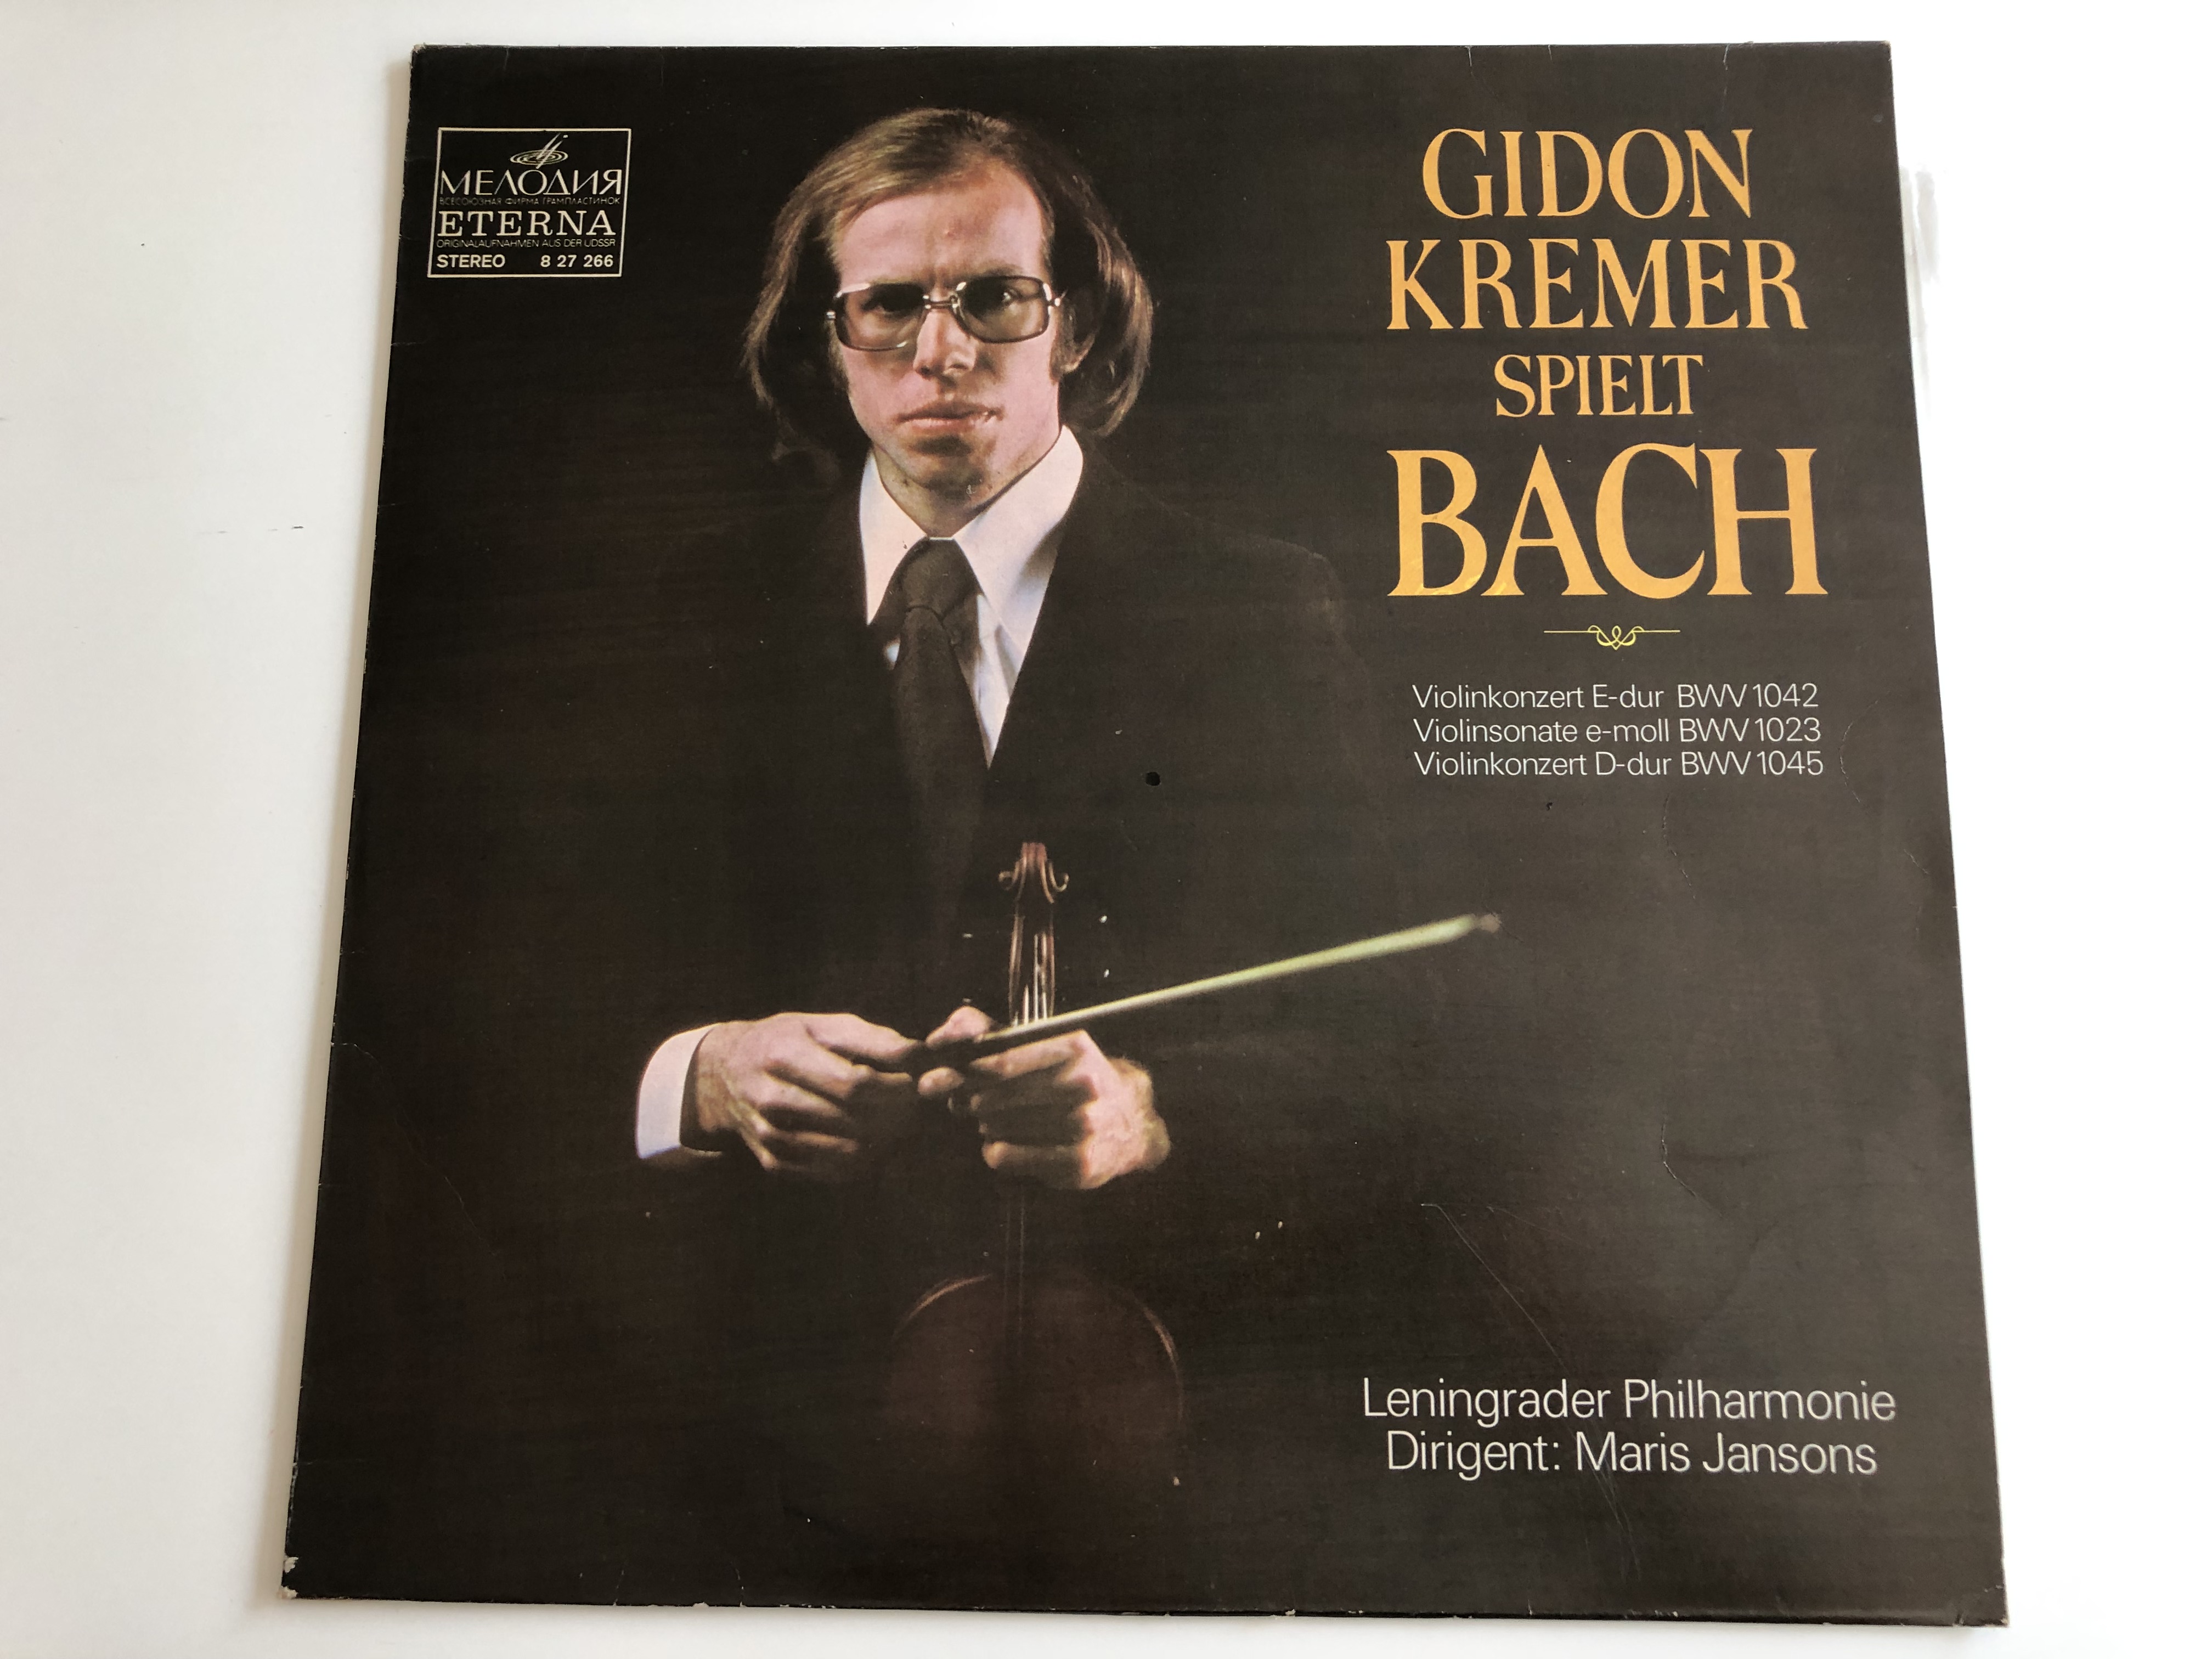 gidon-kremer-spielt-bach-violinkonzert-e-dur-bwv-1042-violinsonate-e-moll-bwv-102-violinkonzert-d-dur-bwv-1045-leningrader-philharmonie-conducted-m-ris-jansons-melodia-e-1-.jpg